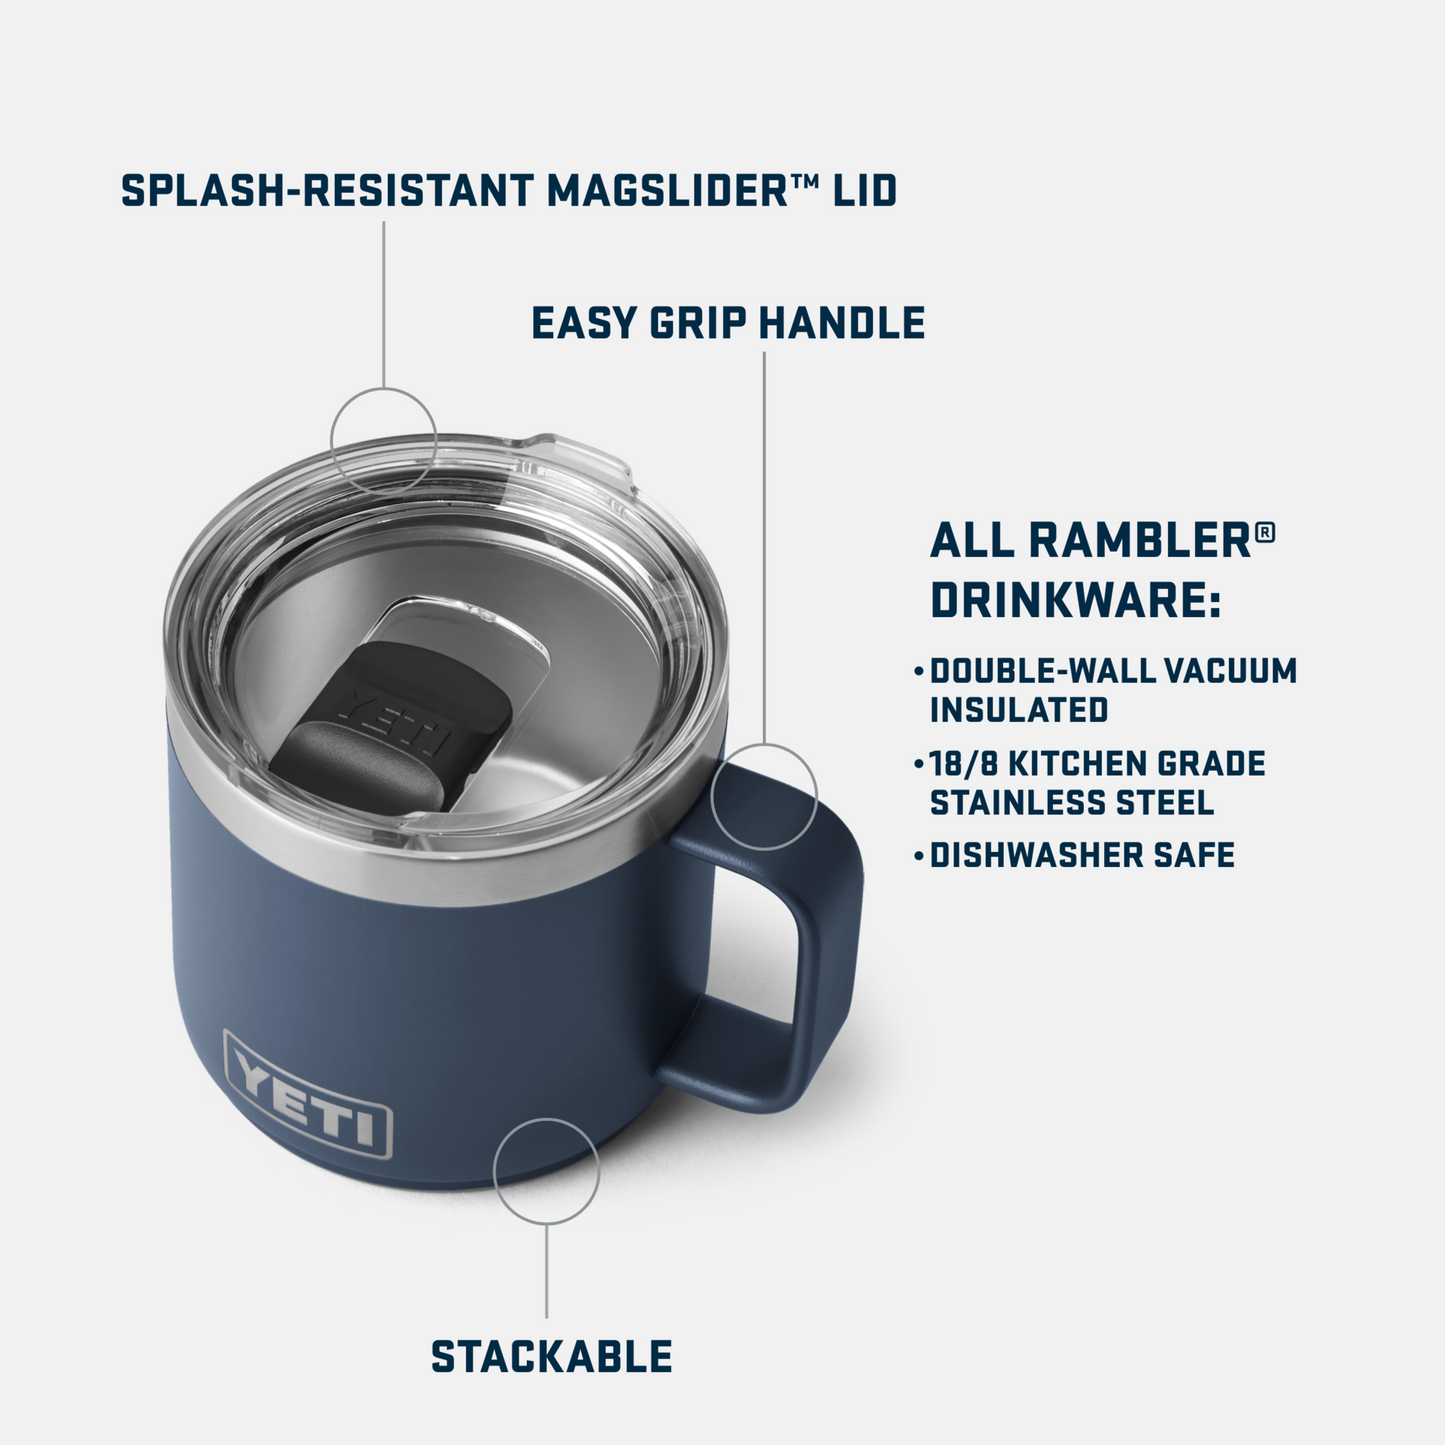 YETI Rambler® 14 oz (414 ml) Stackable Mug Rescue Red